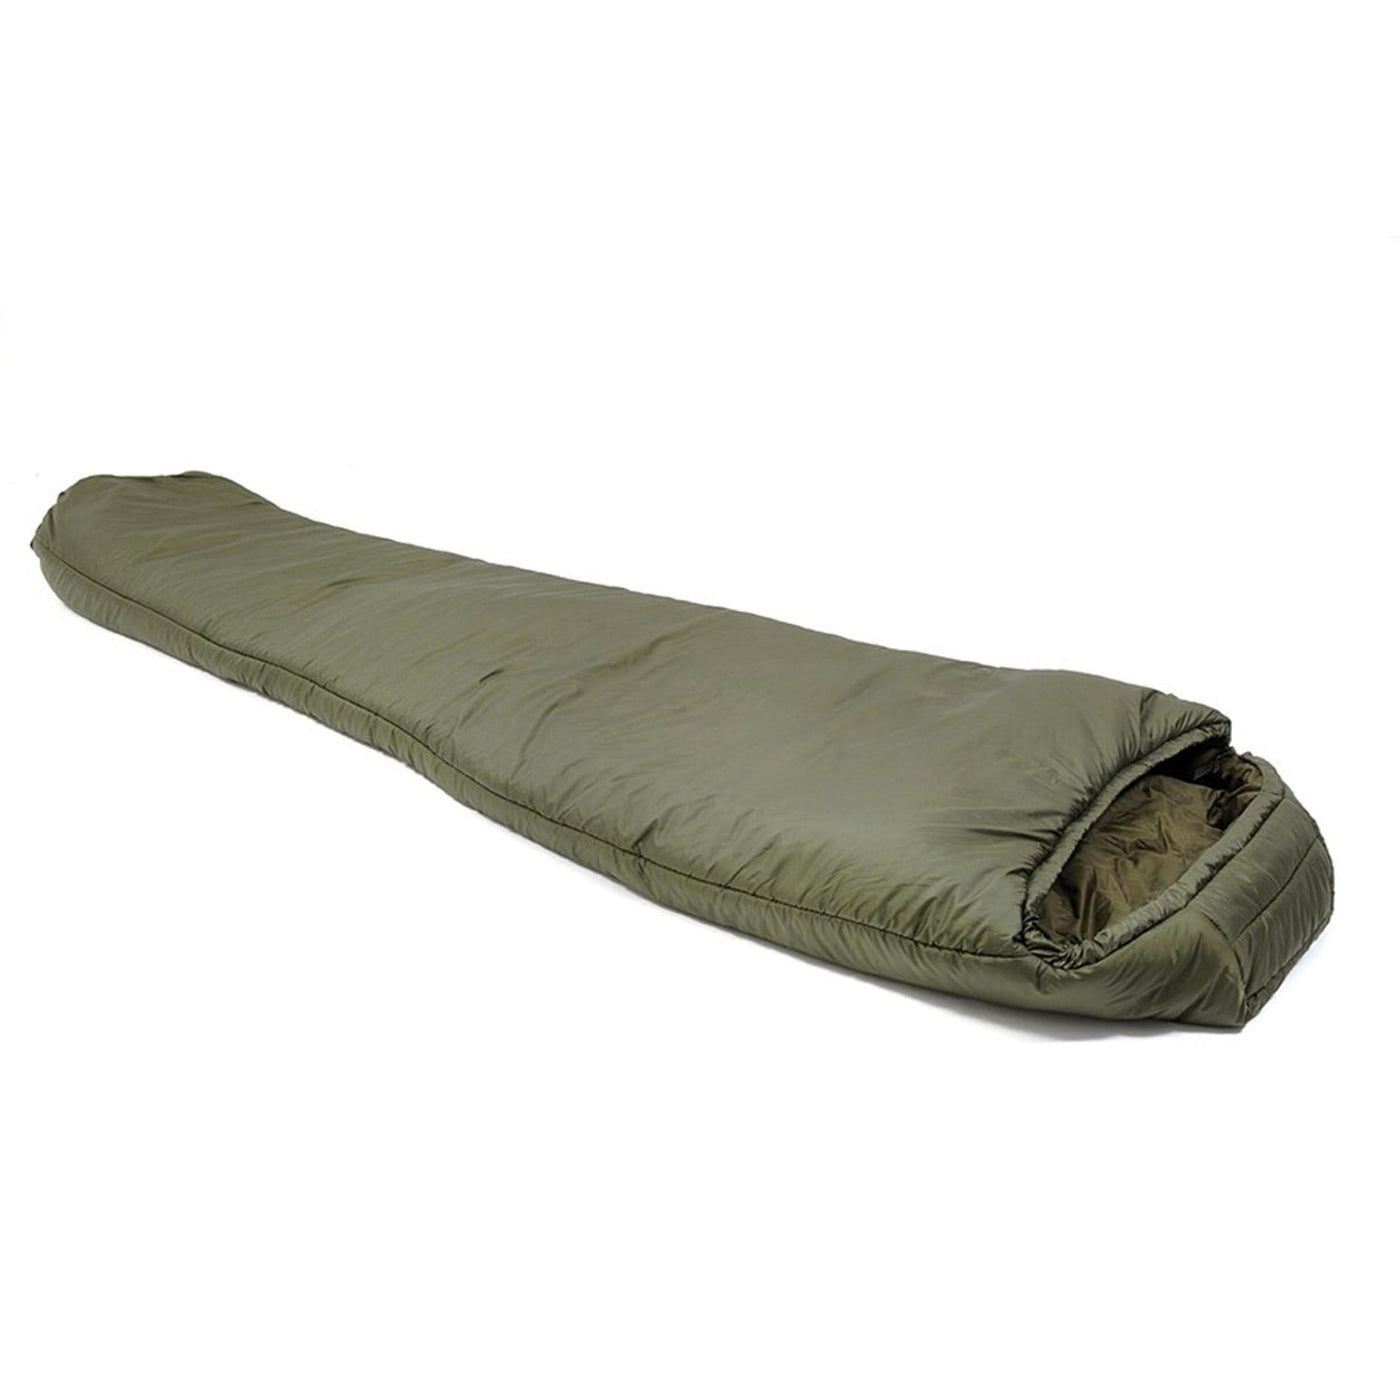 Snugpak Snugpak Softie 12 Osprey Sleeping Bag Olive Camping And Outdoor